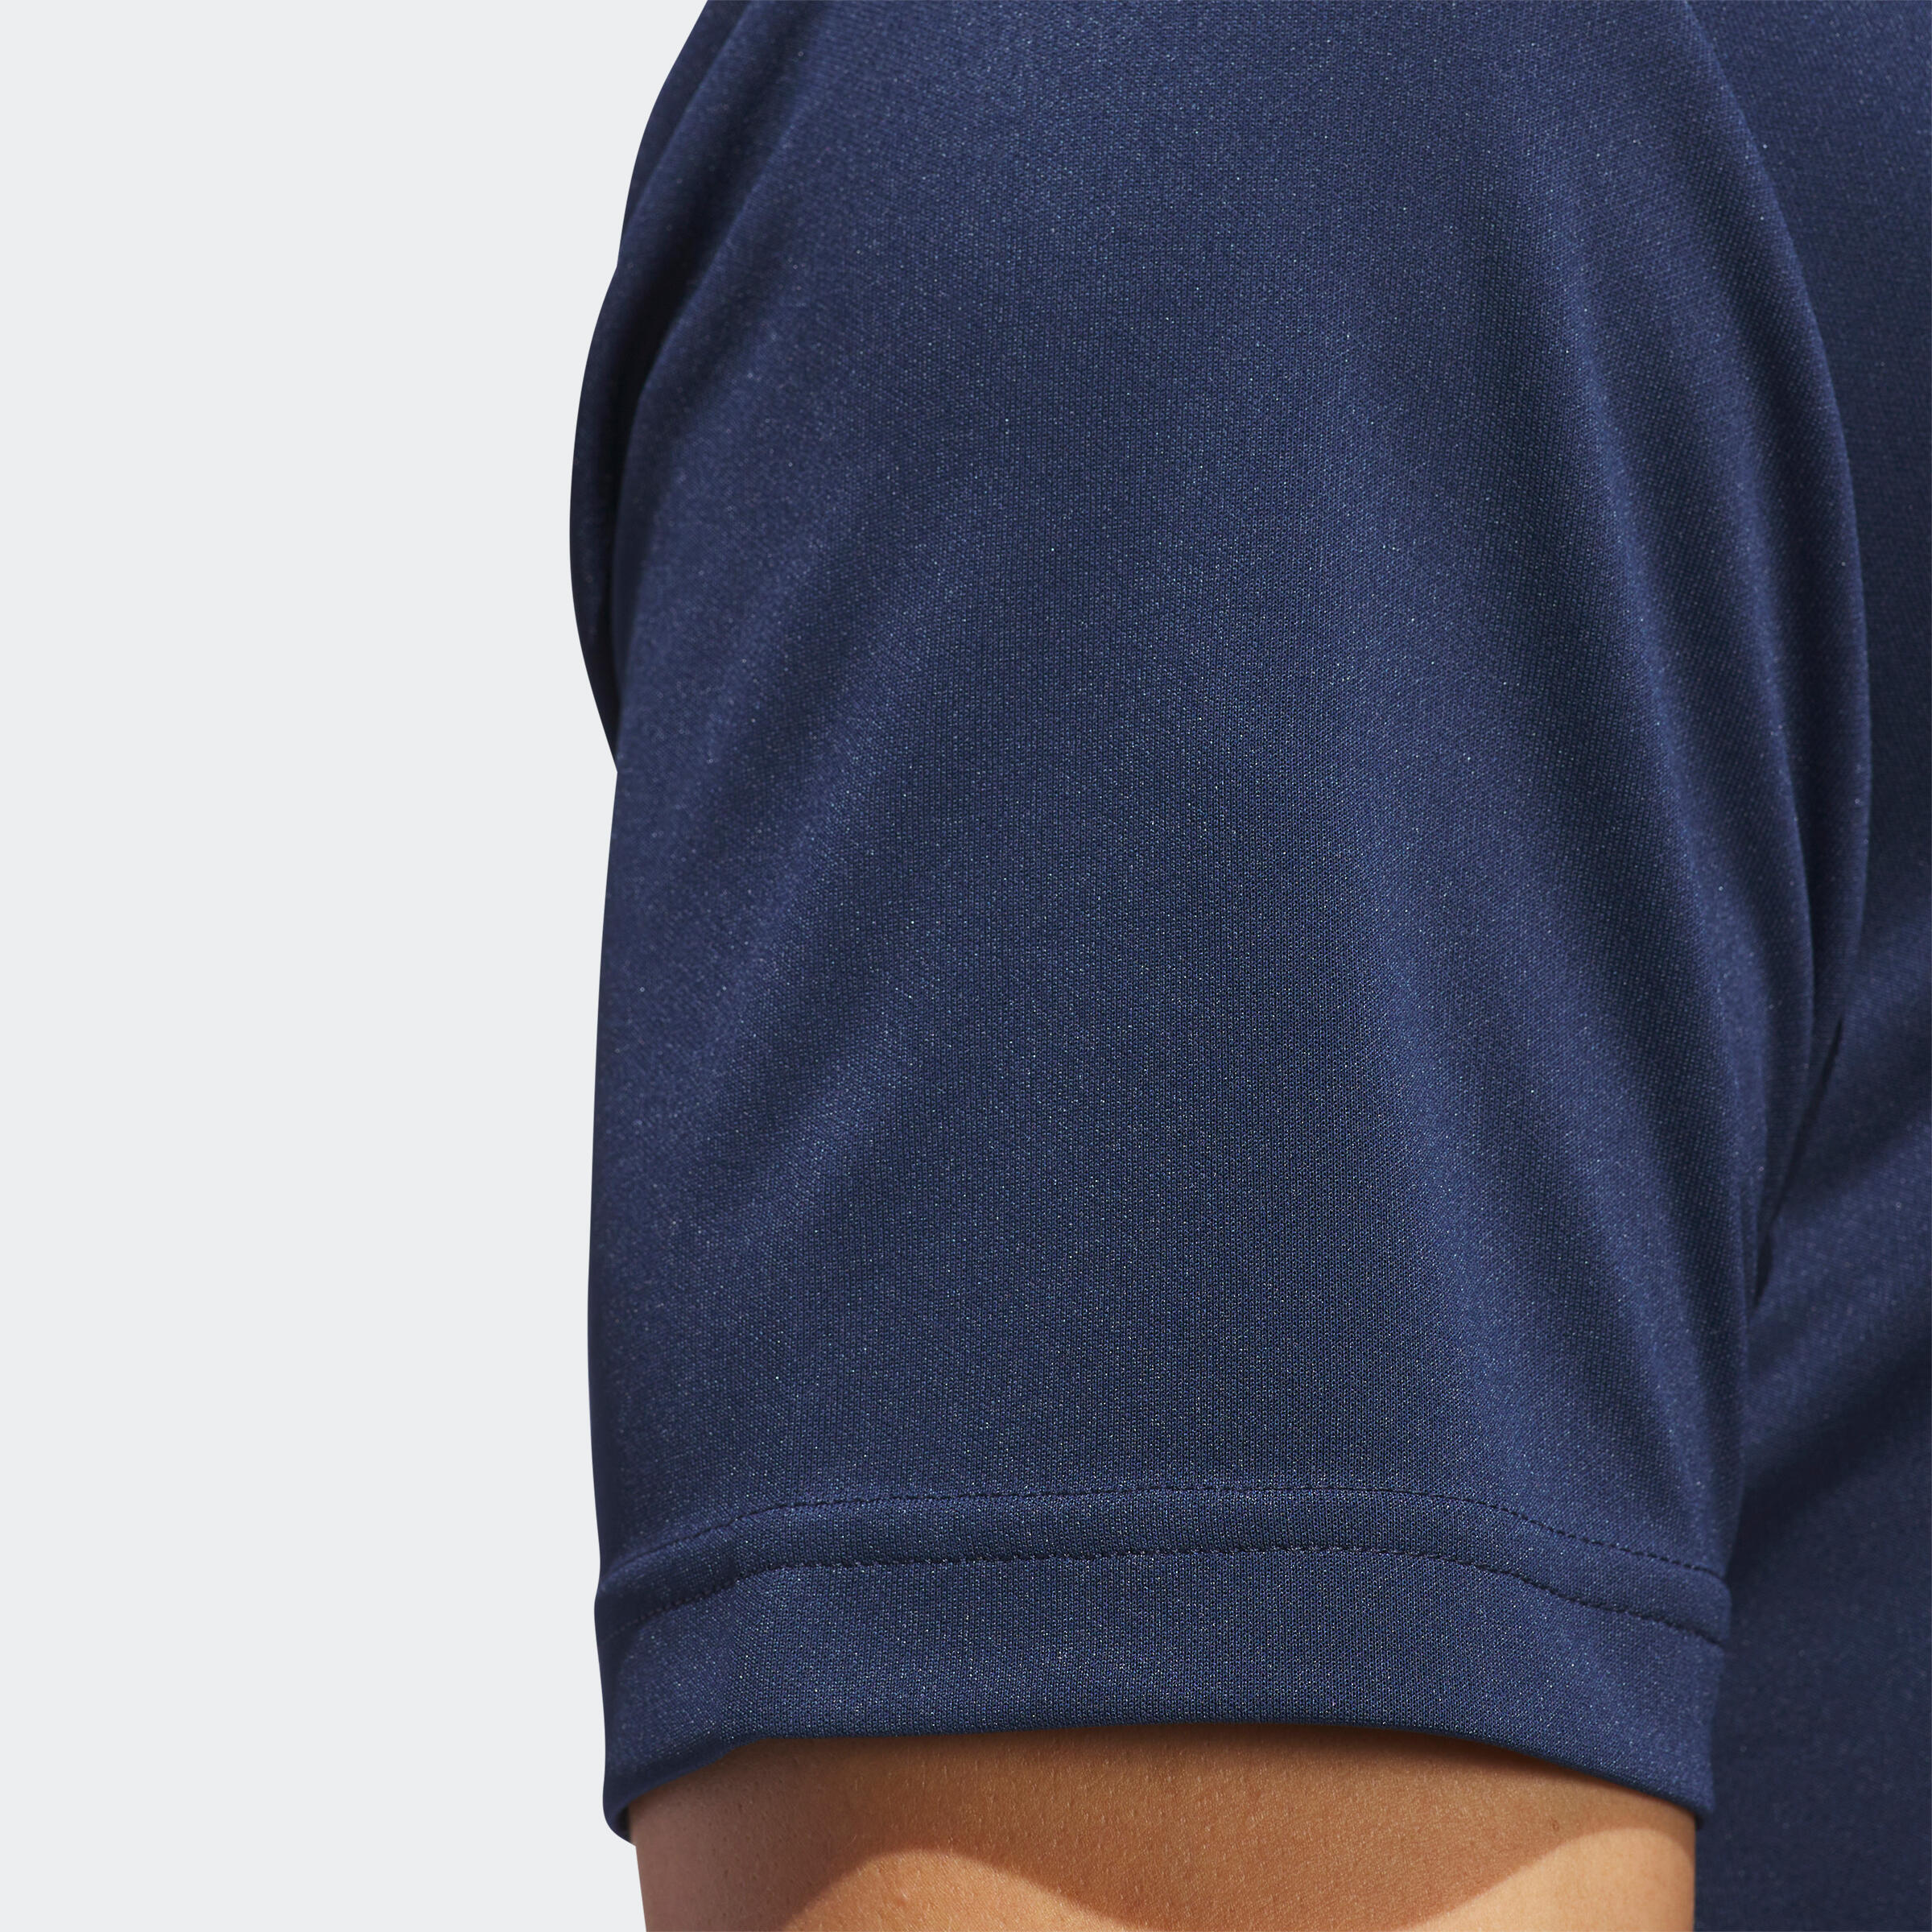 Men's golf short sleeve polo shirt - Adidas navy blue 4/4